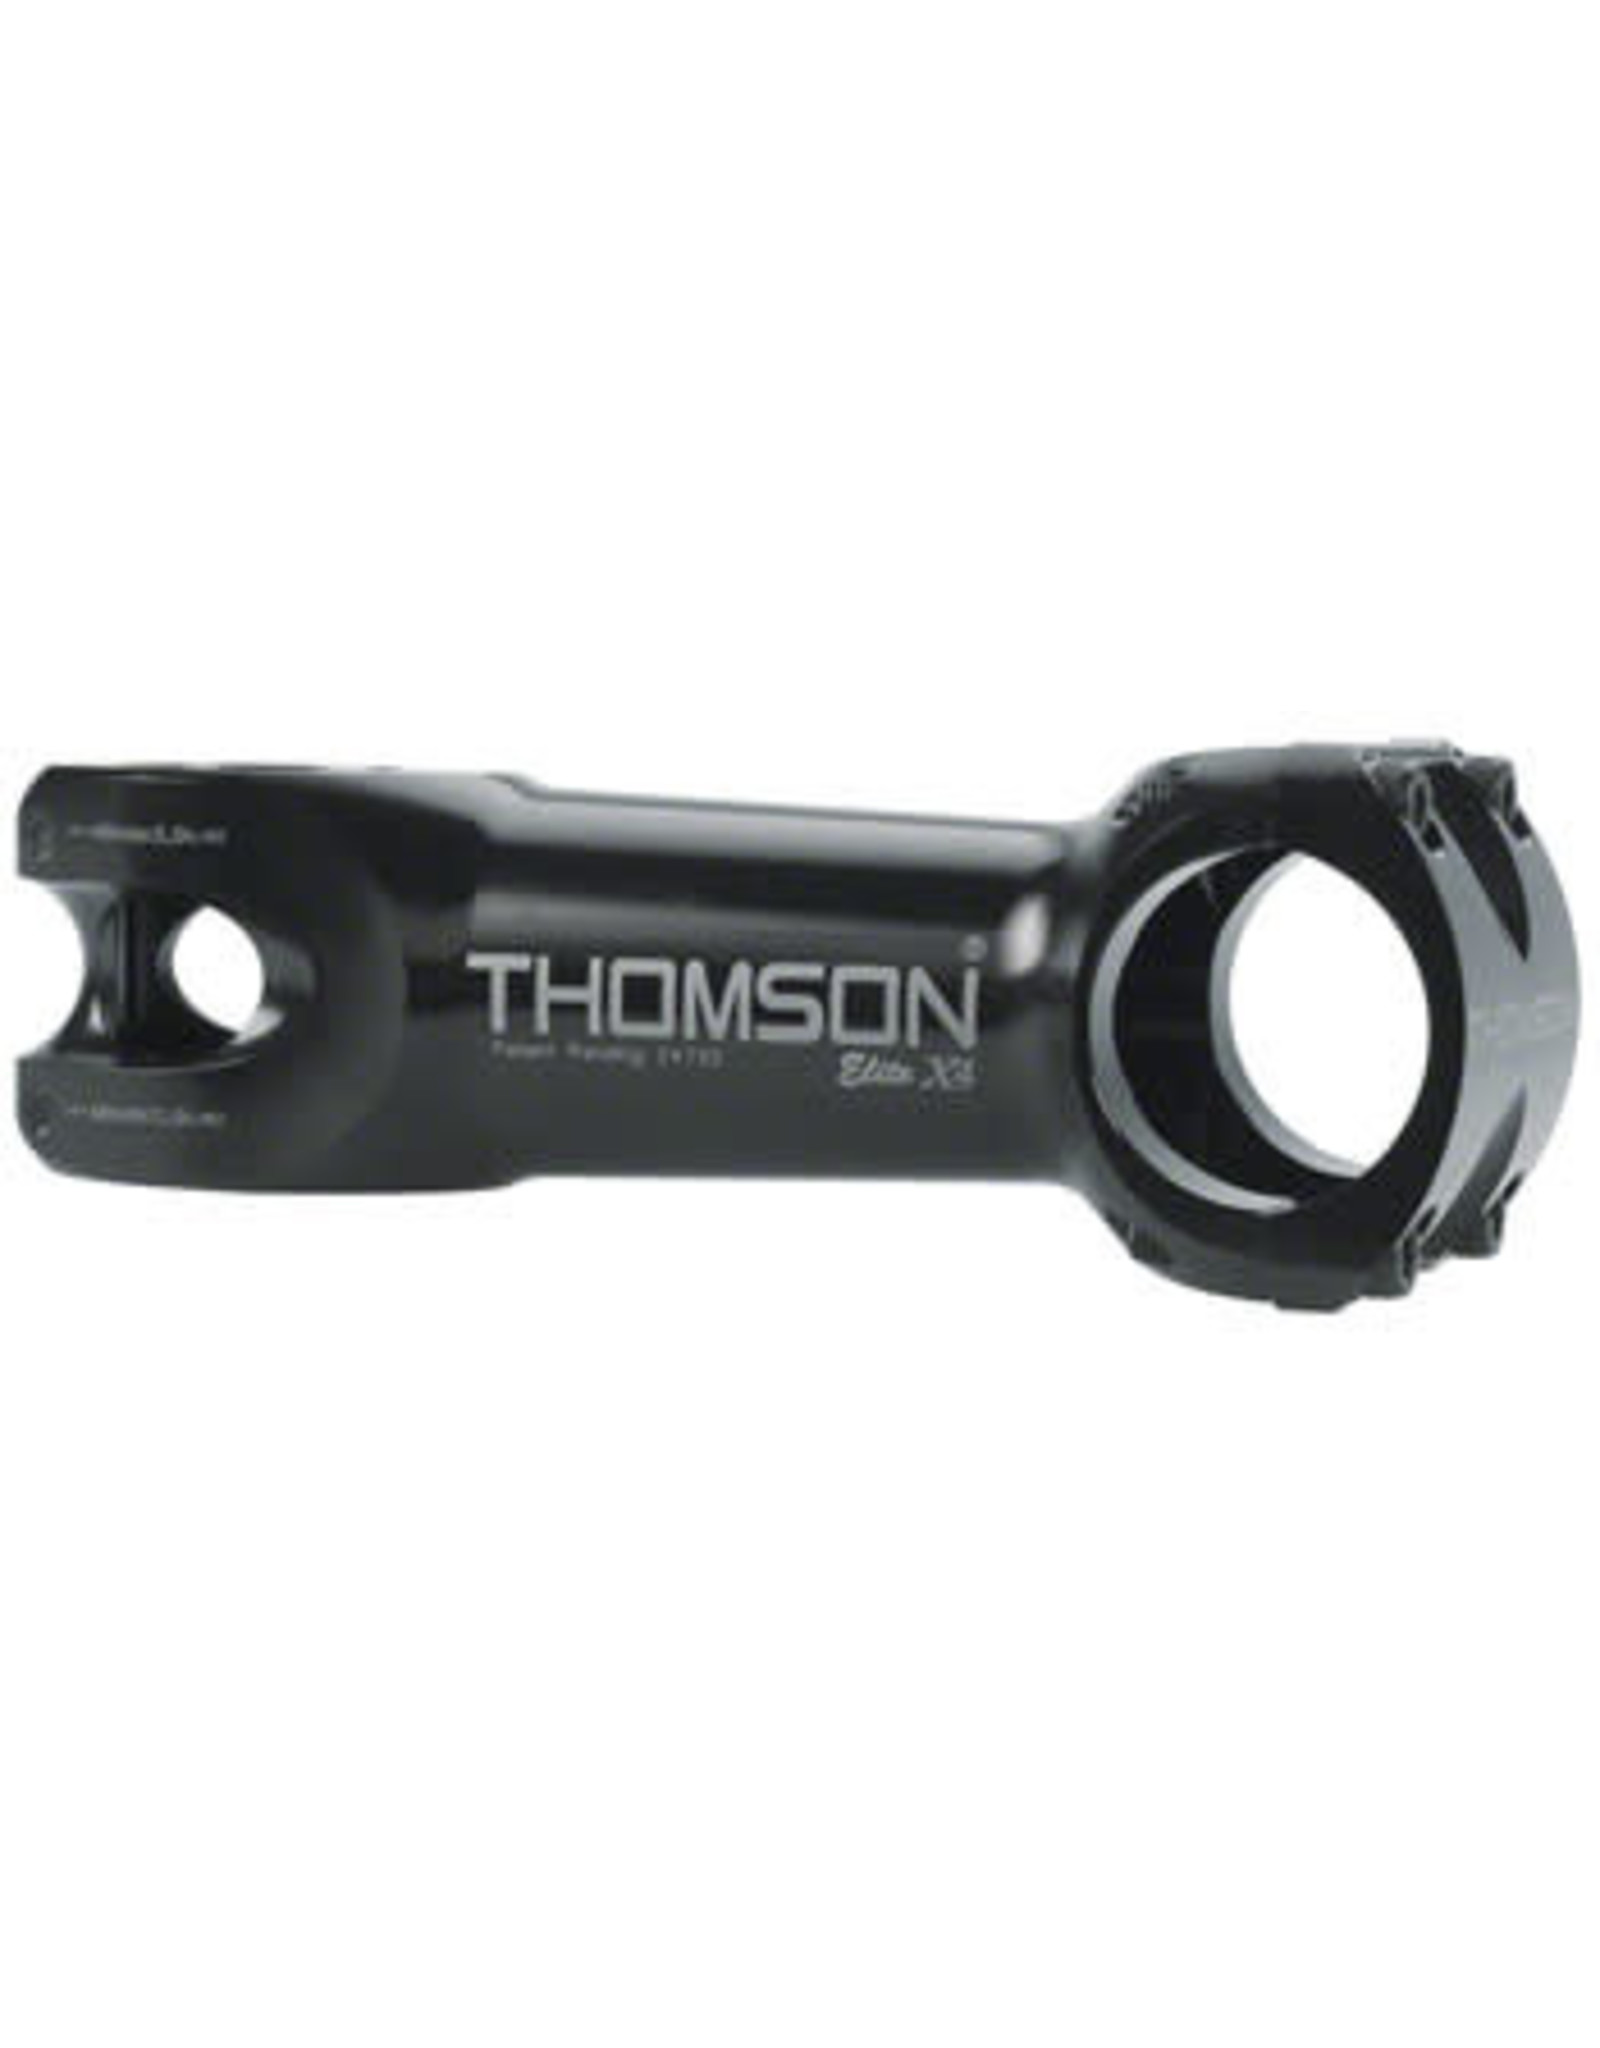 Thomson Thomson Elite X4 Mountain Stem Aluminum  1 1/8" 31.8mm Clamp